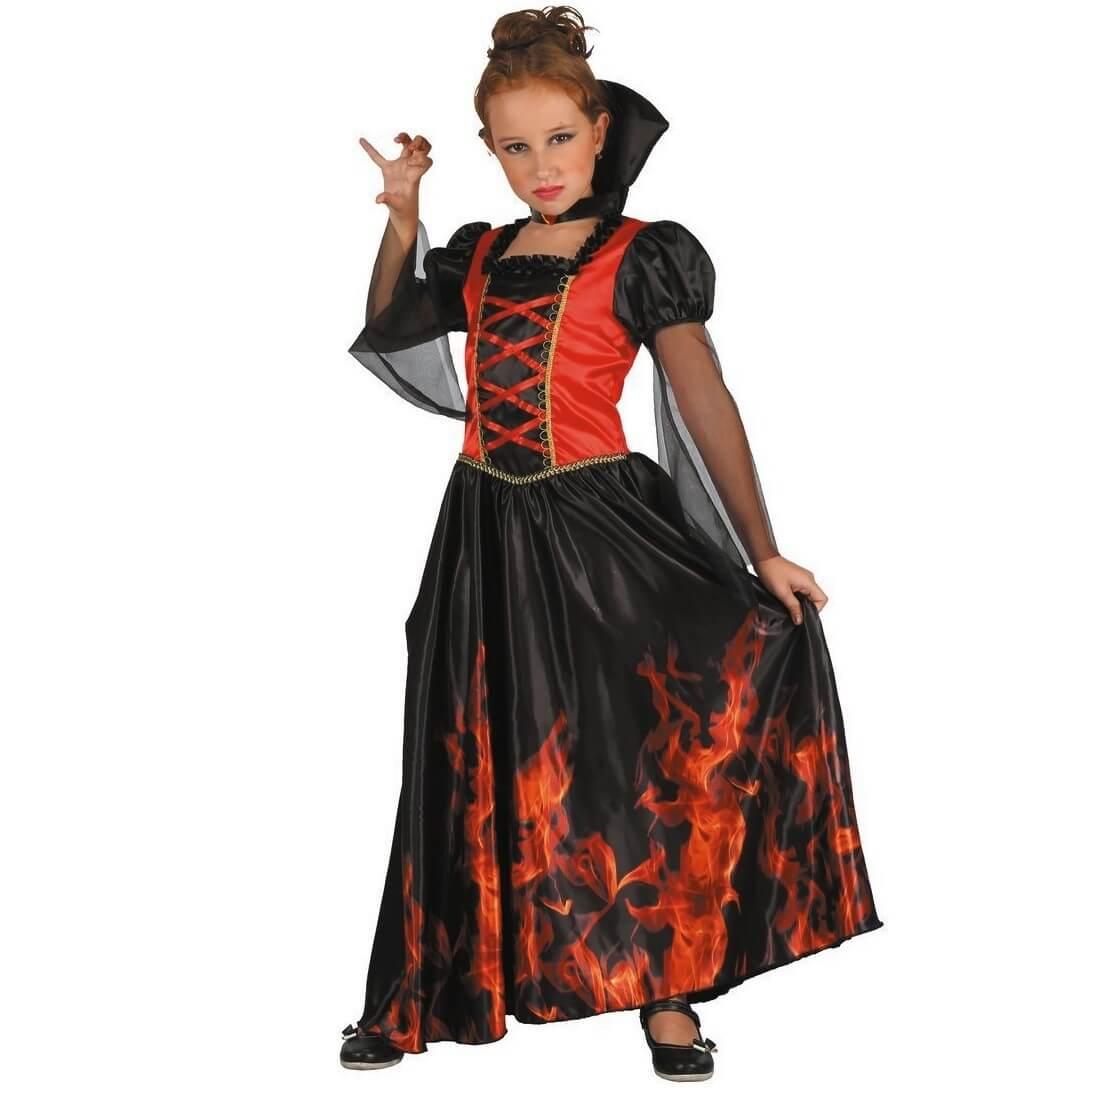 91217 age 5 6 ans costume deguisement fille halloween vampiresse flamboyante